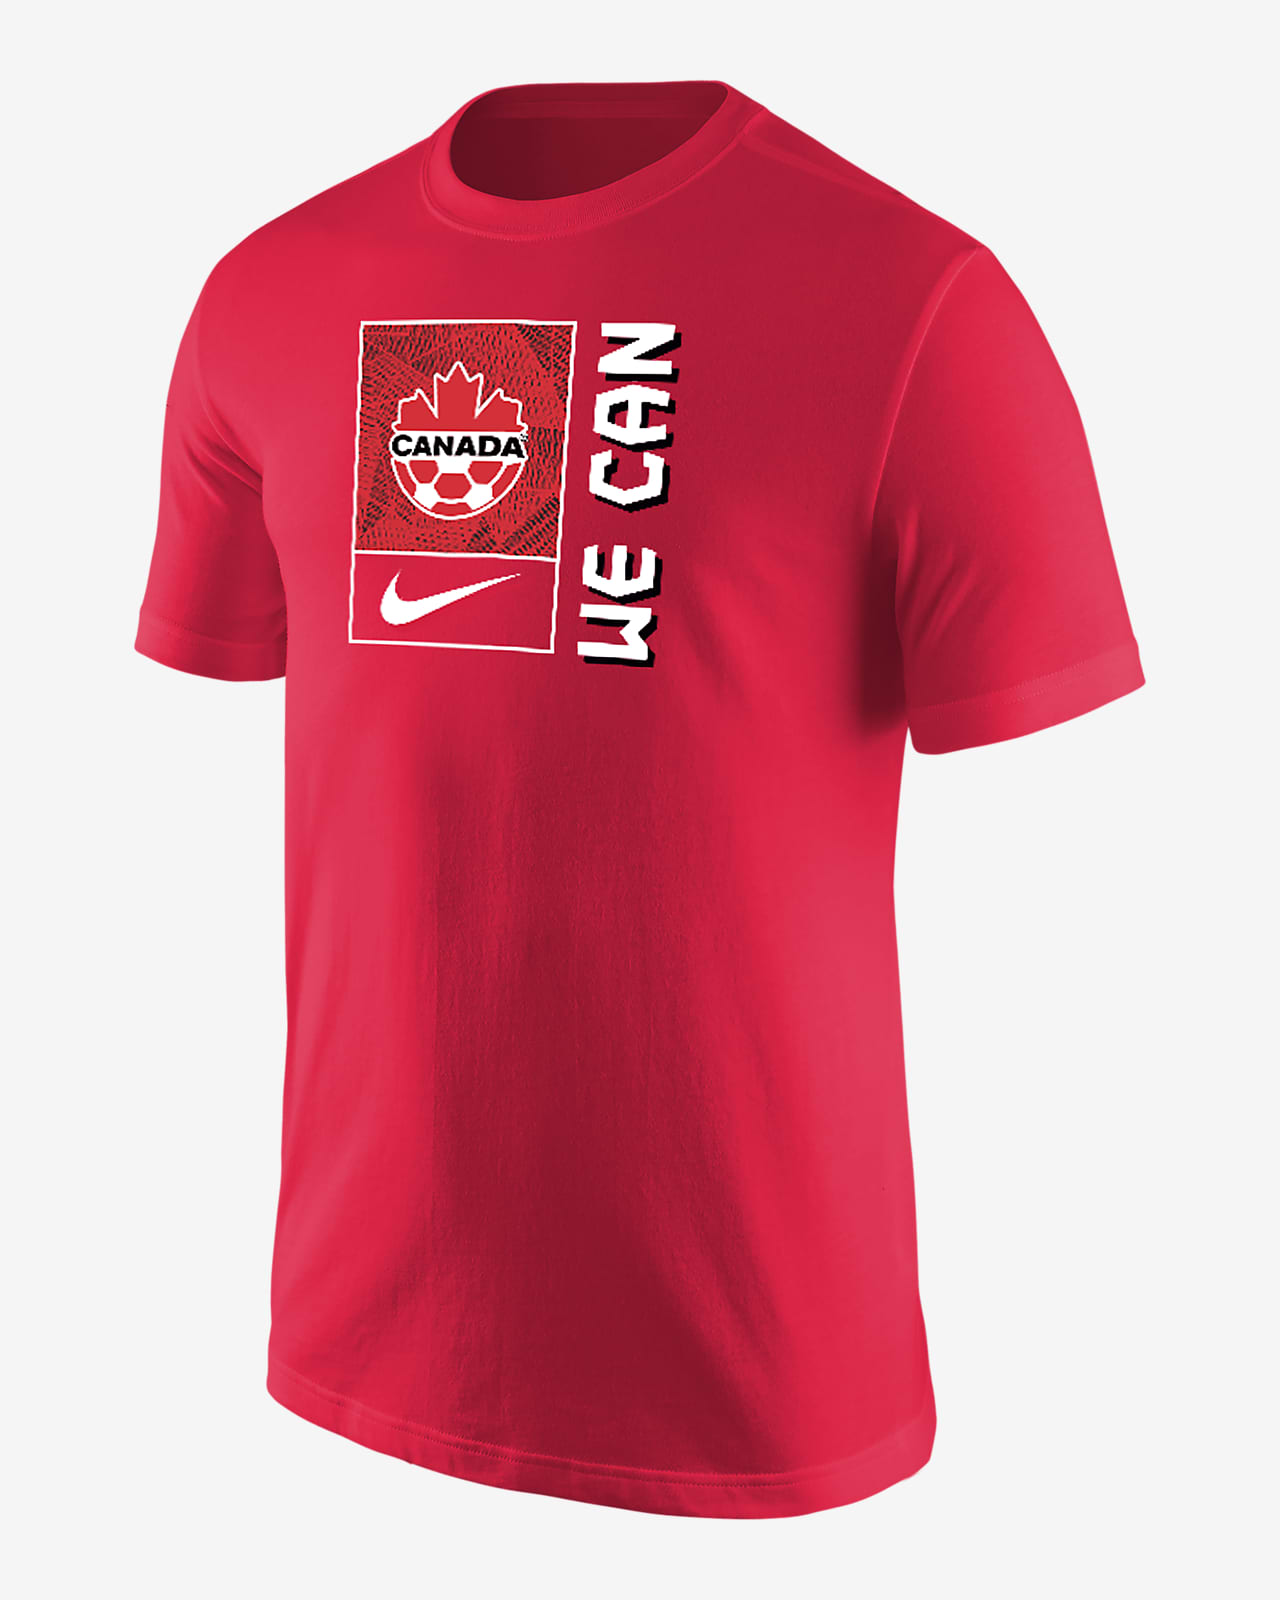 Canada Men's Nike Soccer T-Shirt